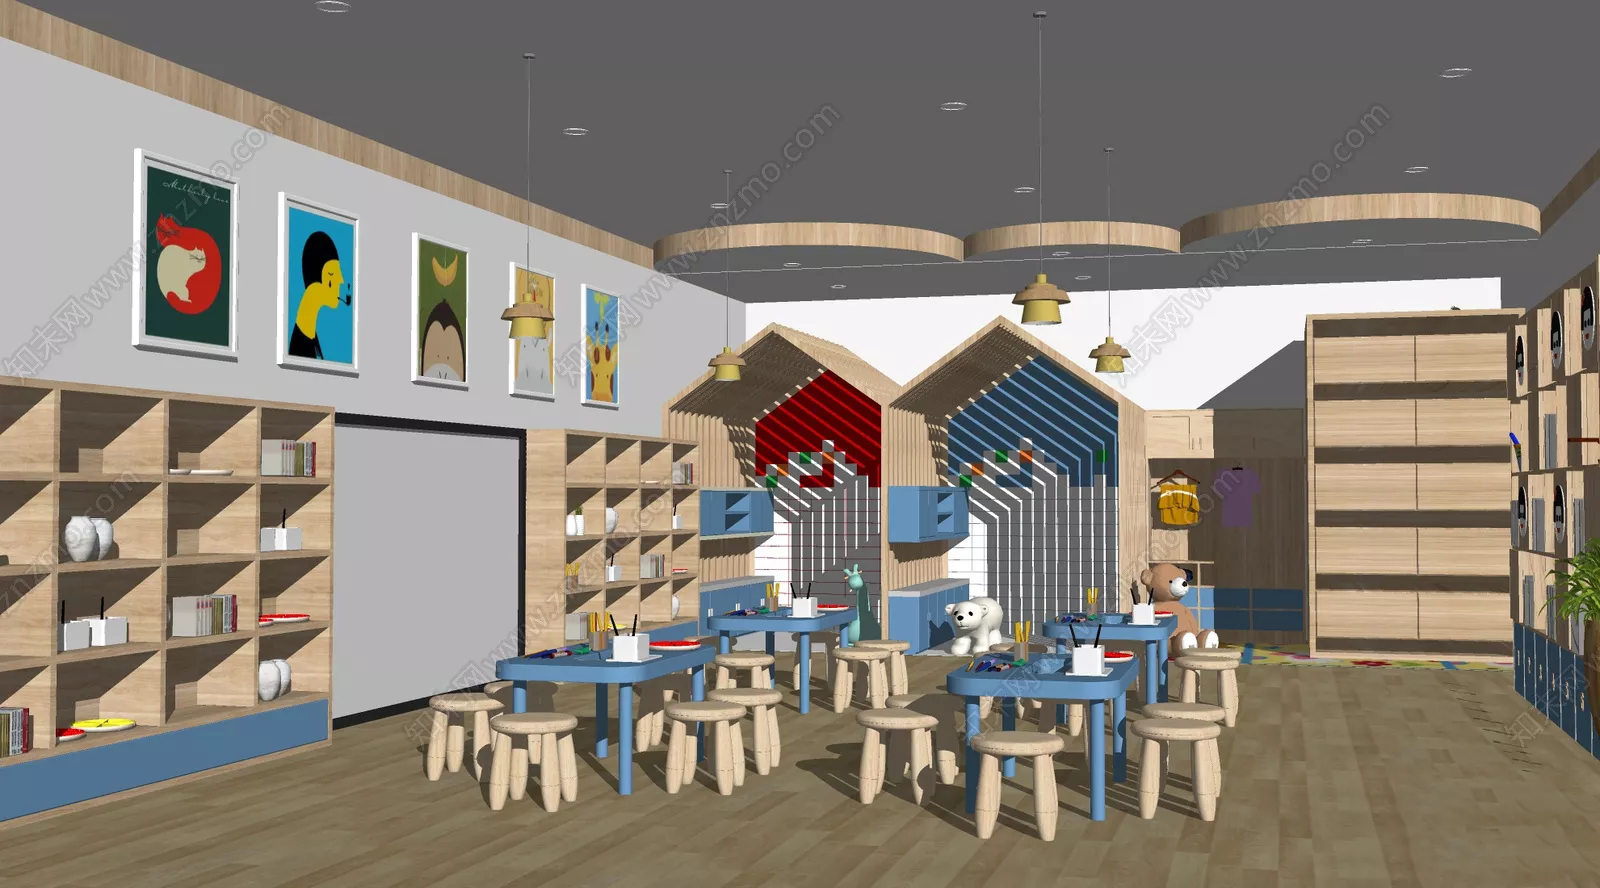 MODERN SCHOOL INTERIOR - SKETCHUP 3D SCENE - VRAY OR ENSCAPE - ID12735